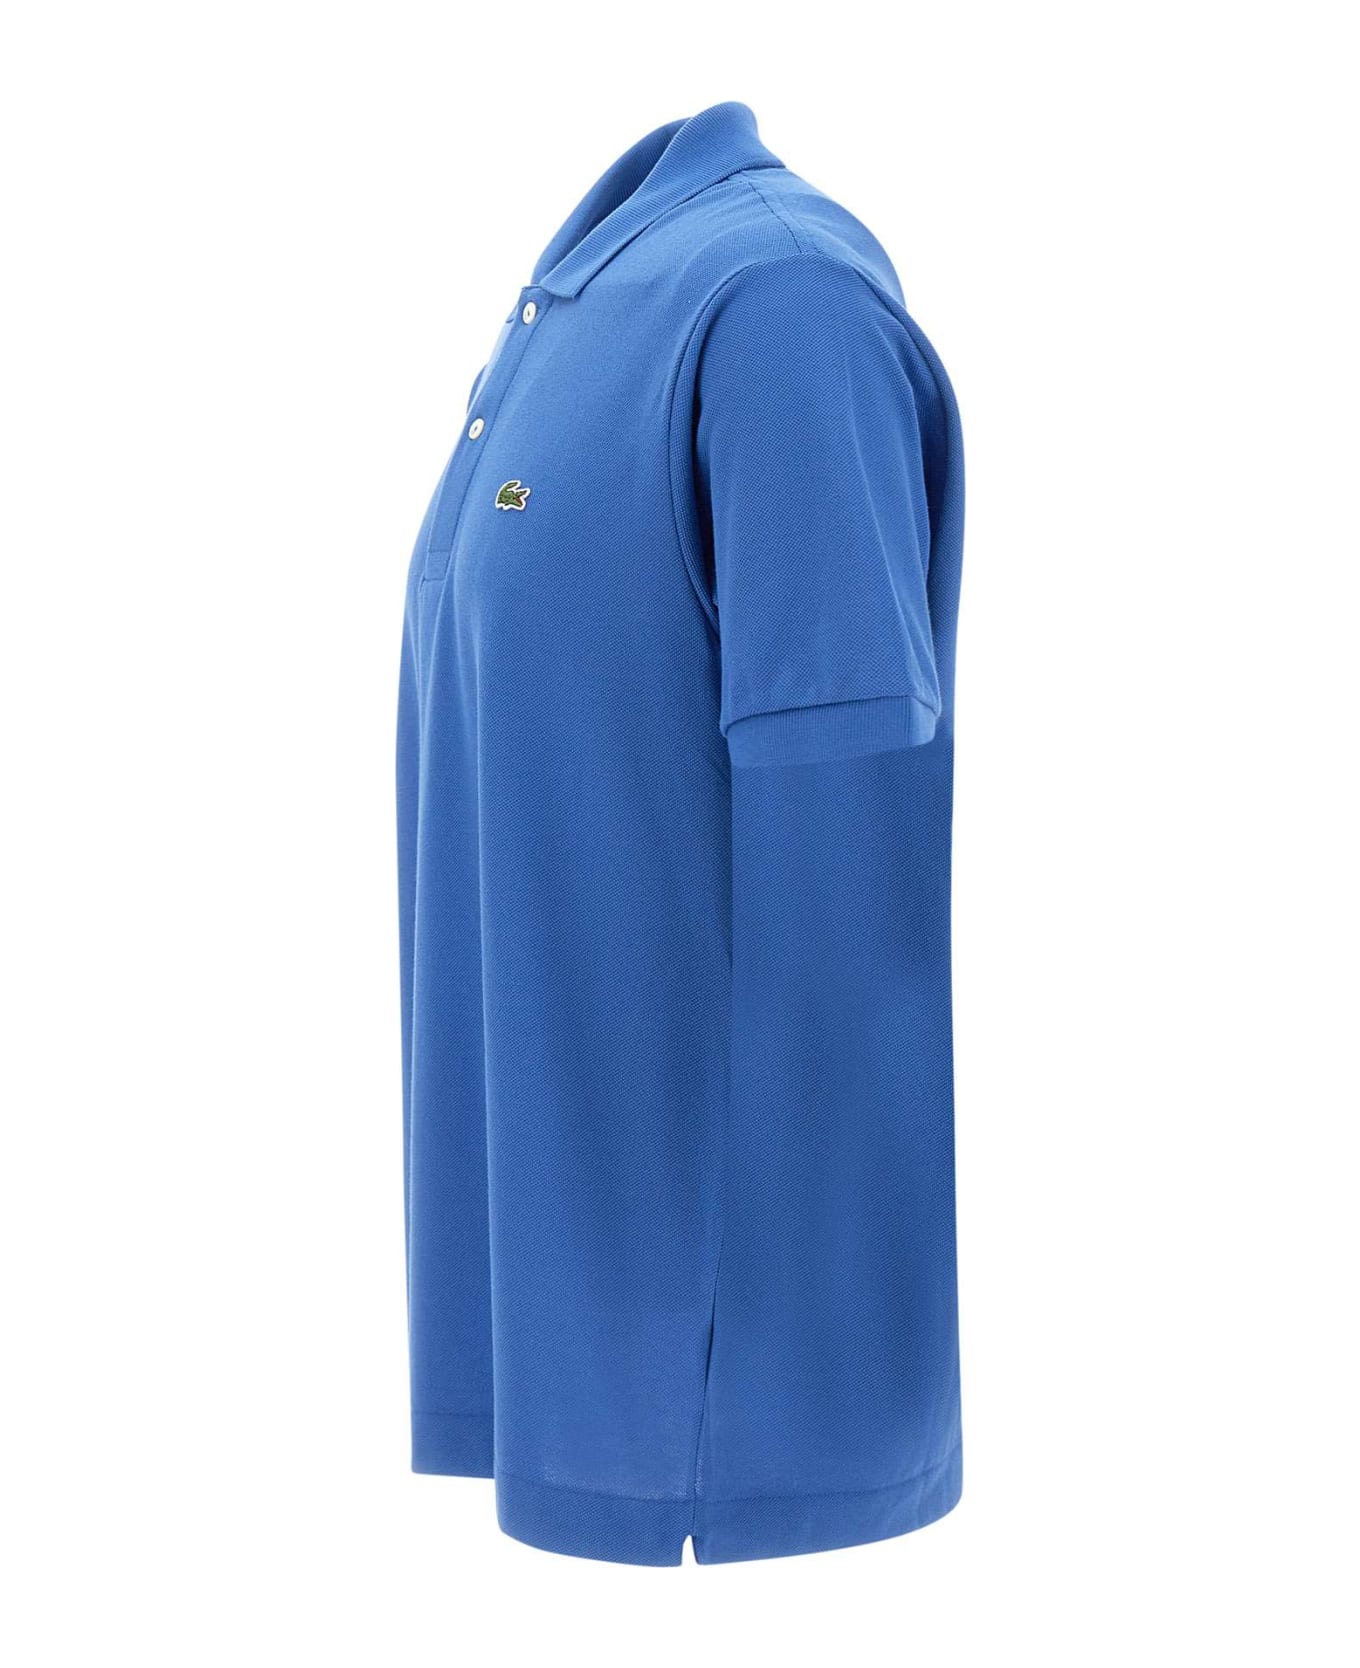 Lacoste Cotton Piquet Polo Shirt - BLUE